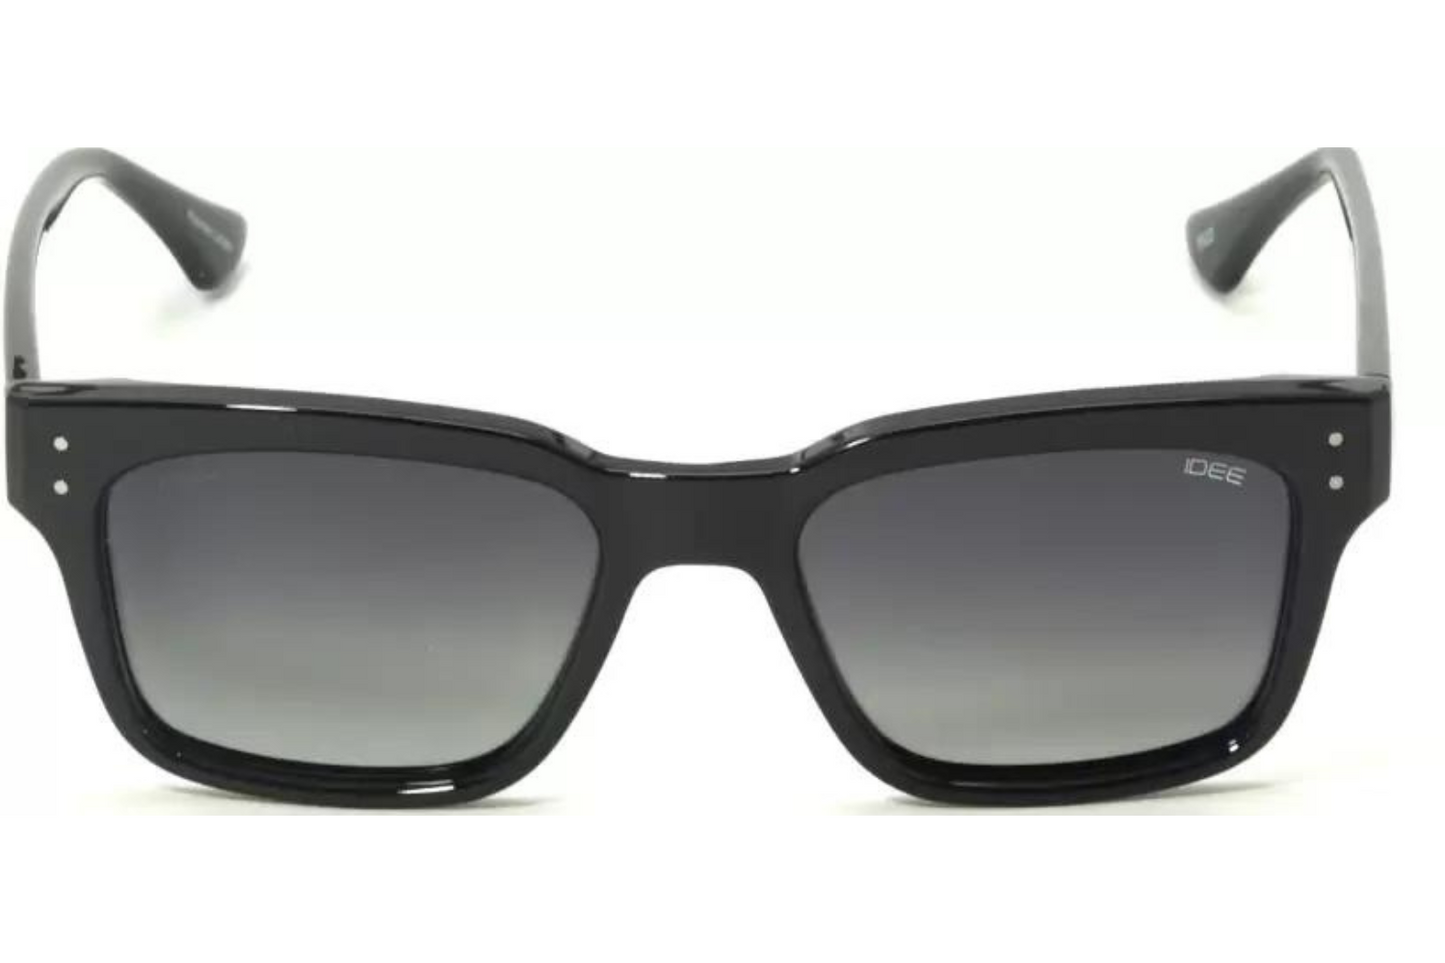 IDEE Sunglasses S2874 C1P